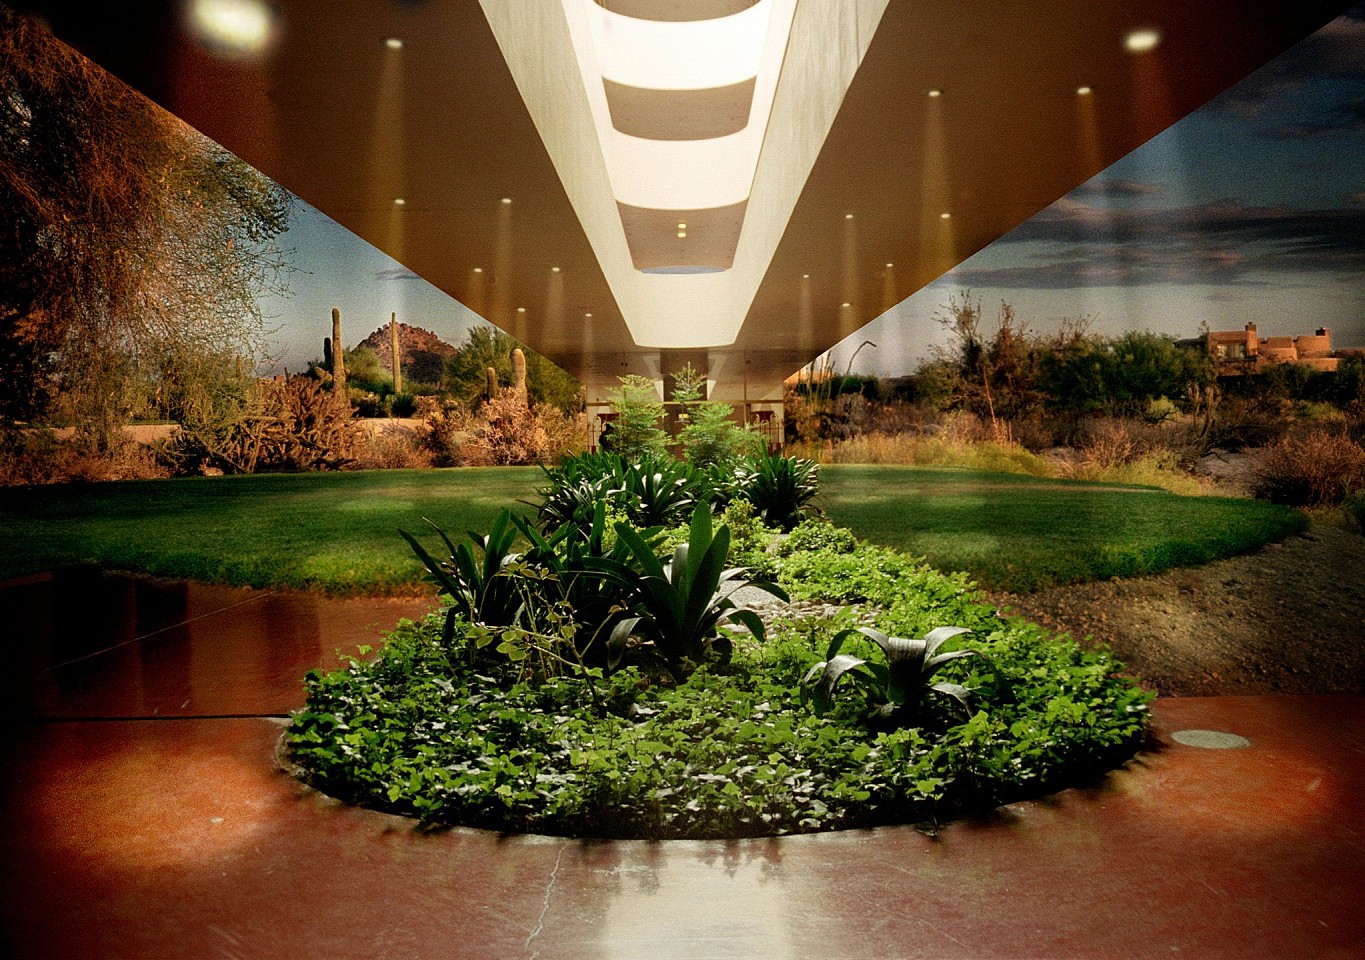 Oliver Wasow, Great Hall, Boulders Resort, Scottsdale AZ
2002, Archival inkjet